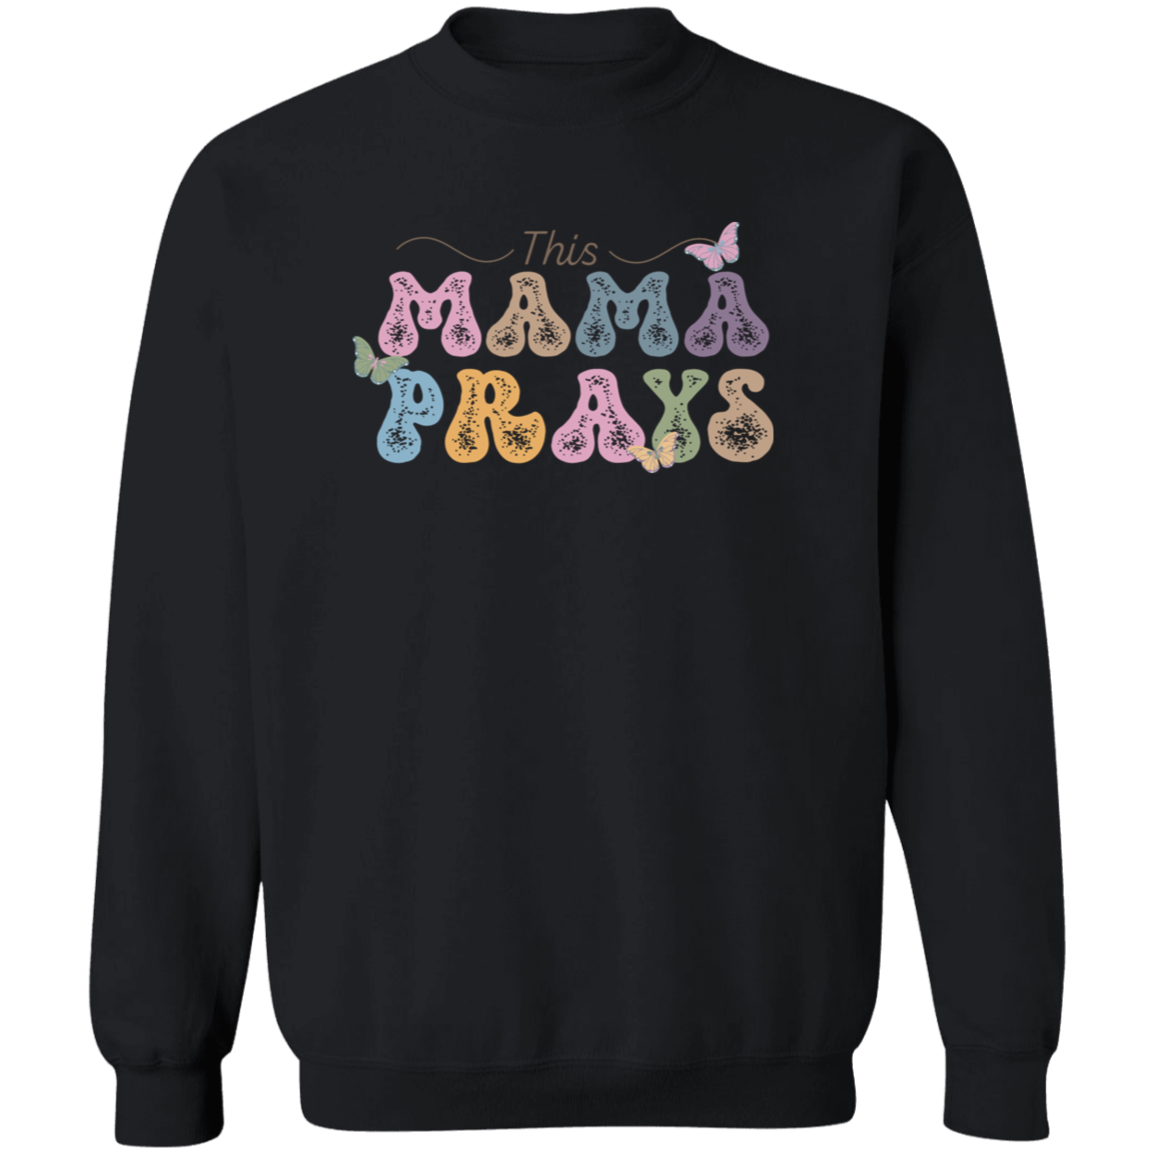 This Mama Prays - Crewneck Sweatshirt